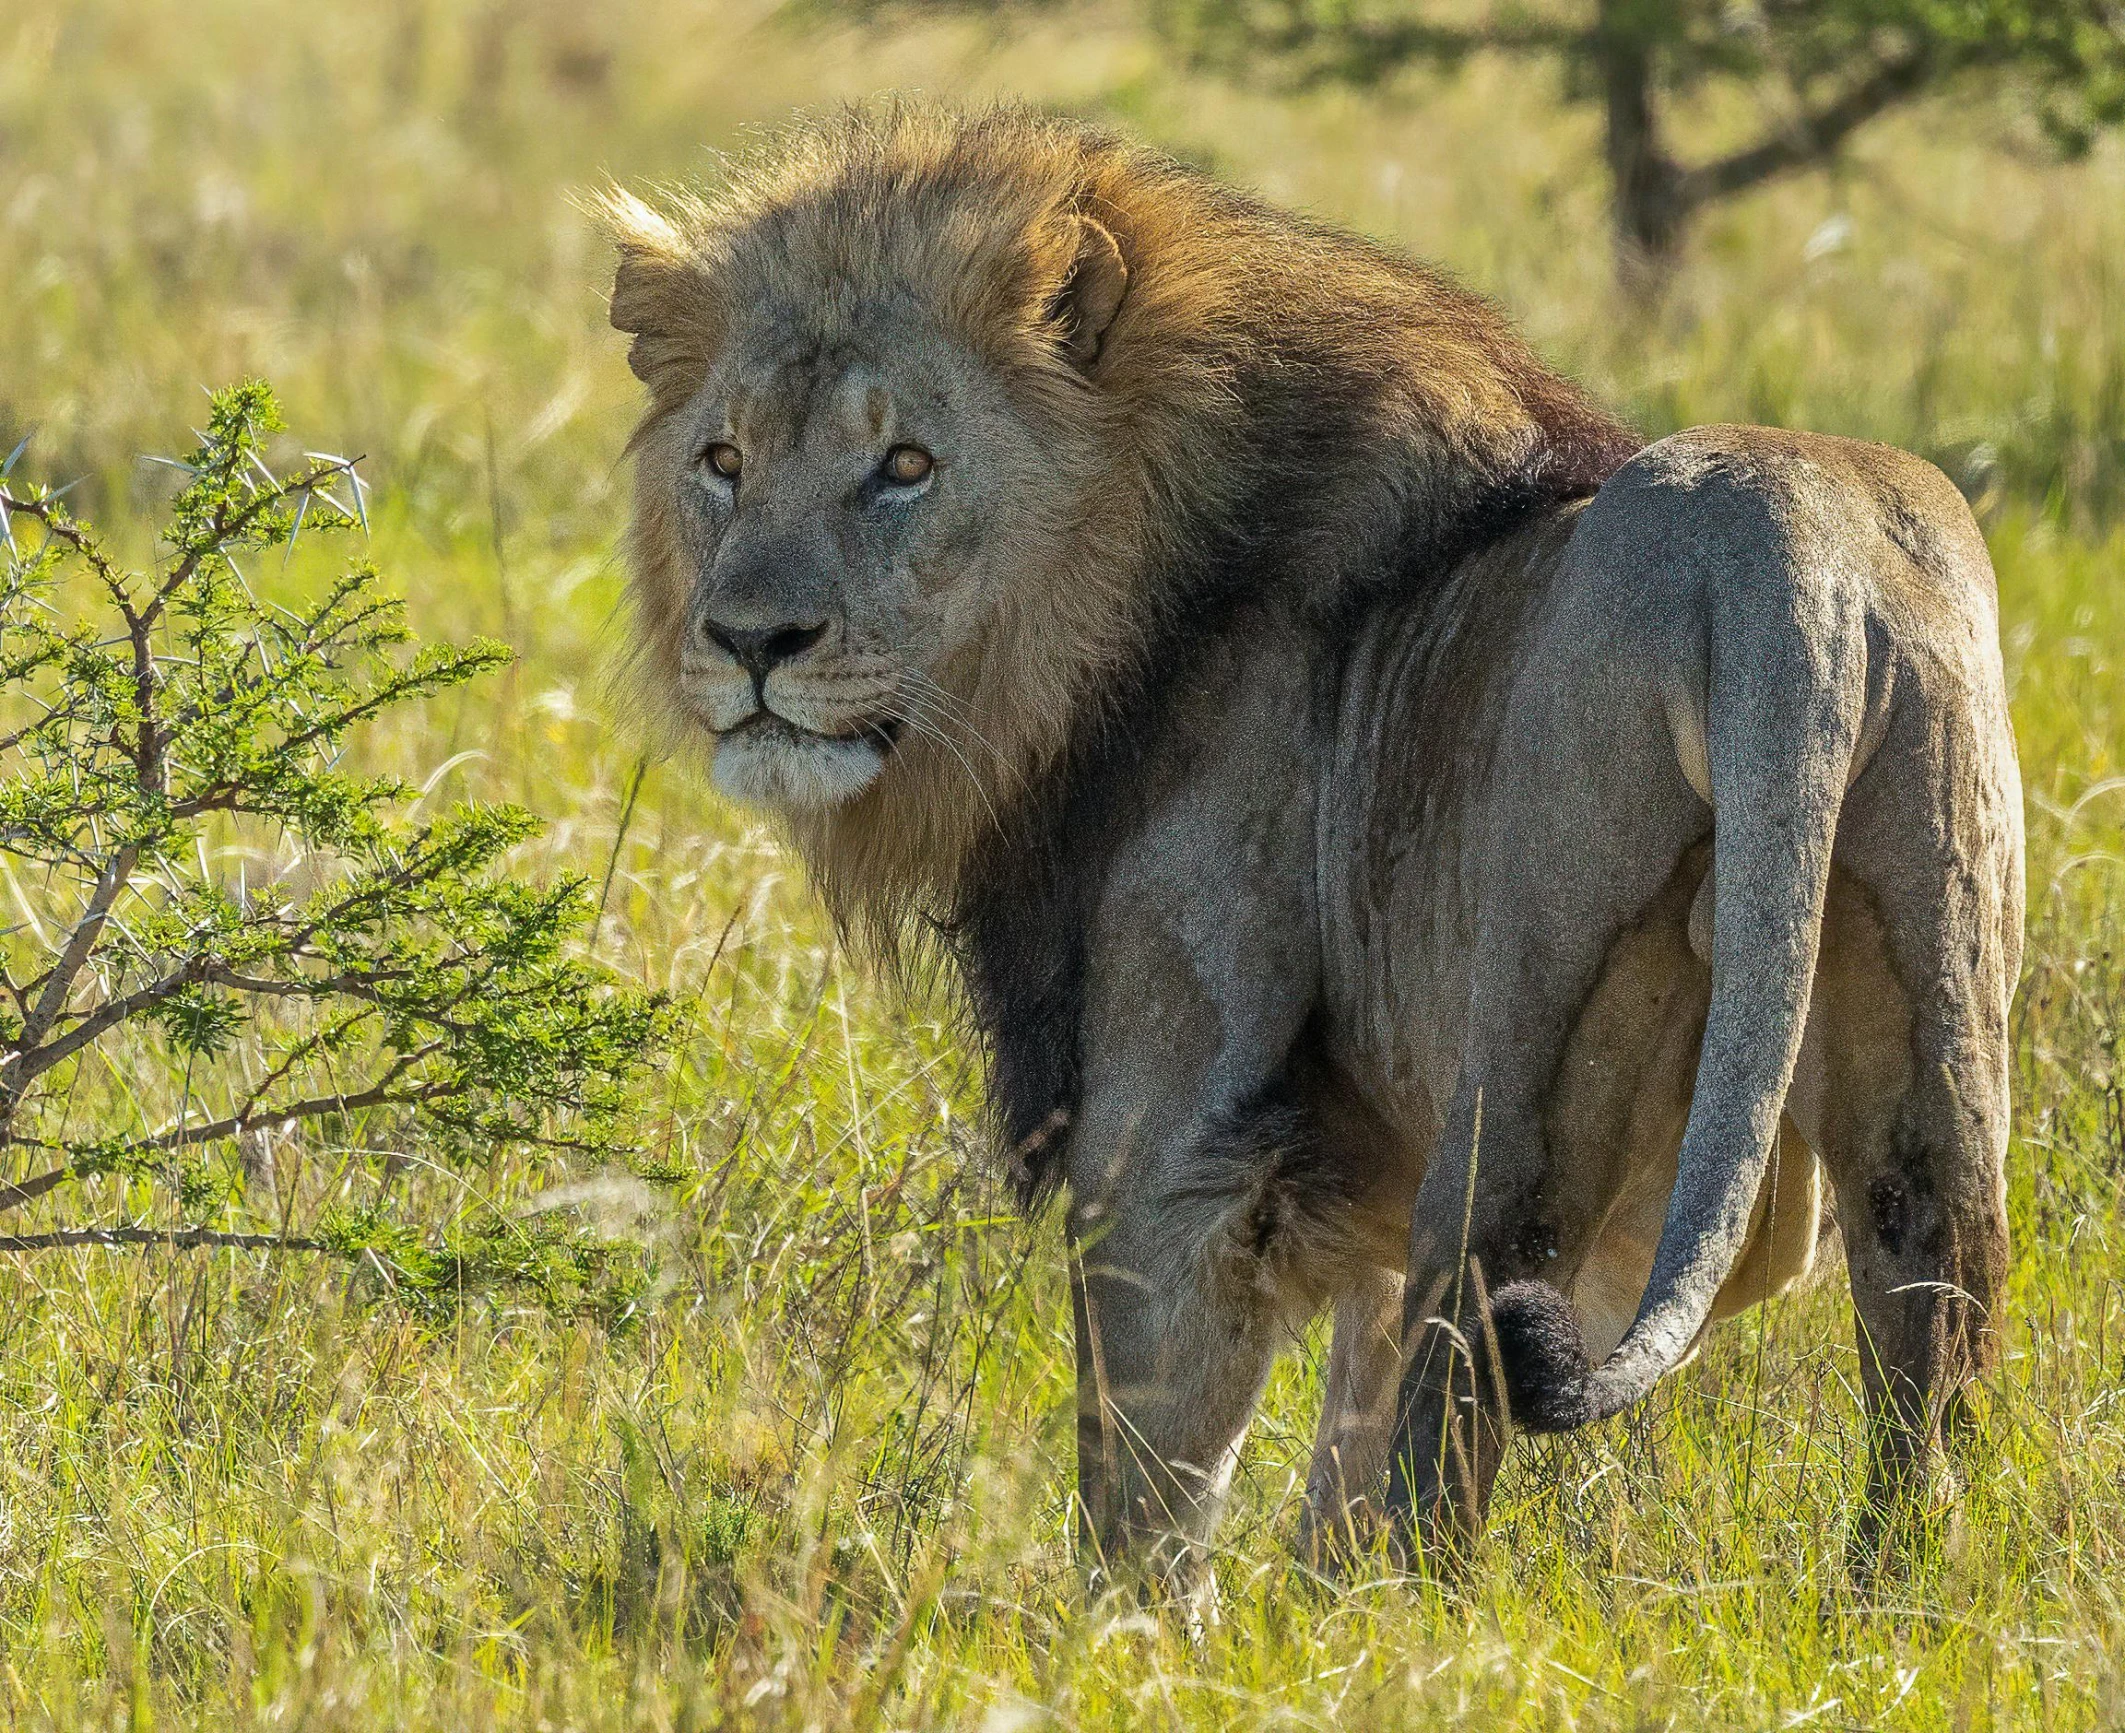 a lion walking through tall grass towards the camera